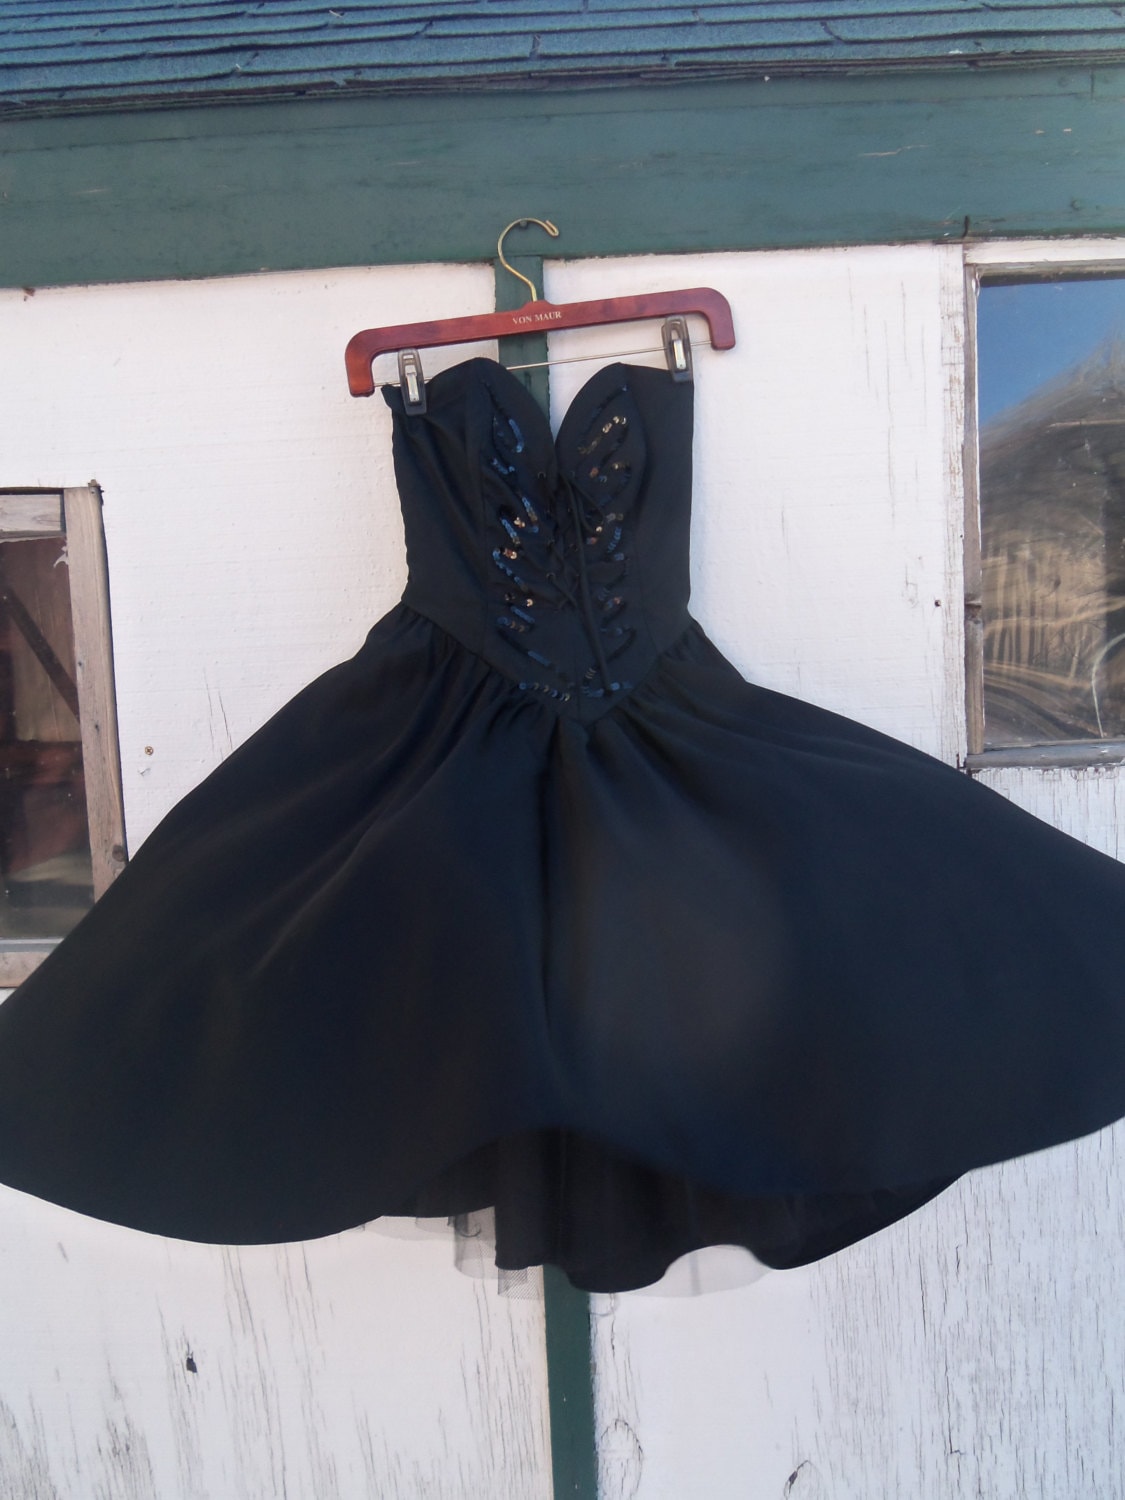 Prachtige zwarte Alfred Angelo formele jurk geweldig voor thuiskomst Kleding Jongenskleding Babykleding voor jongens Truien prom maat 6 